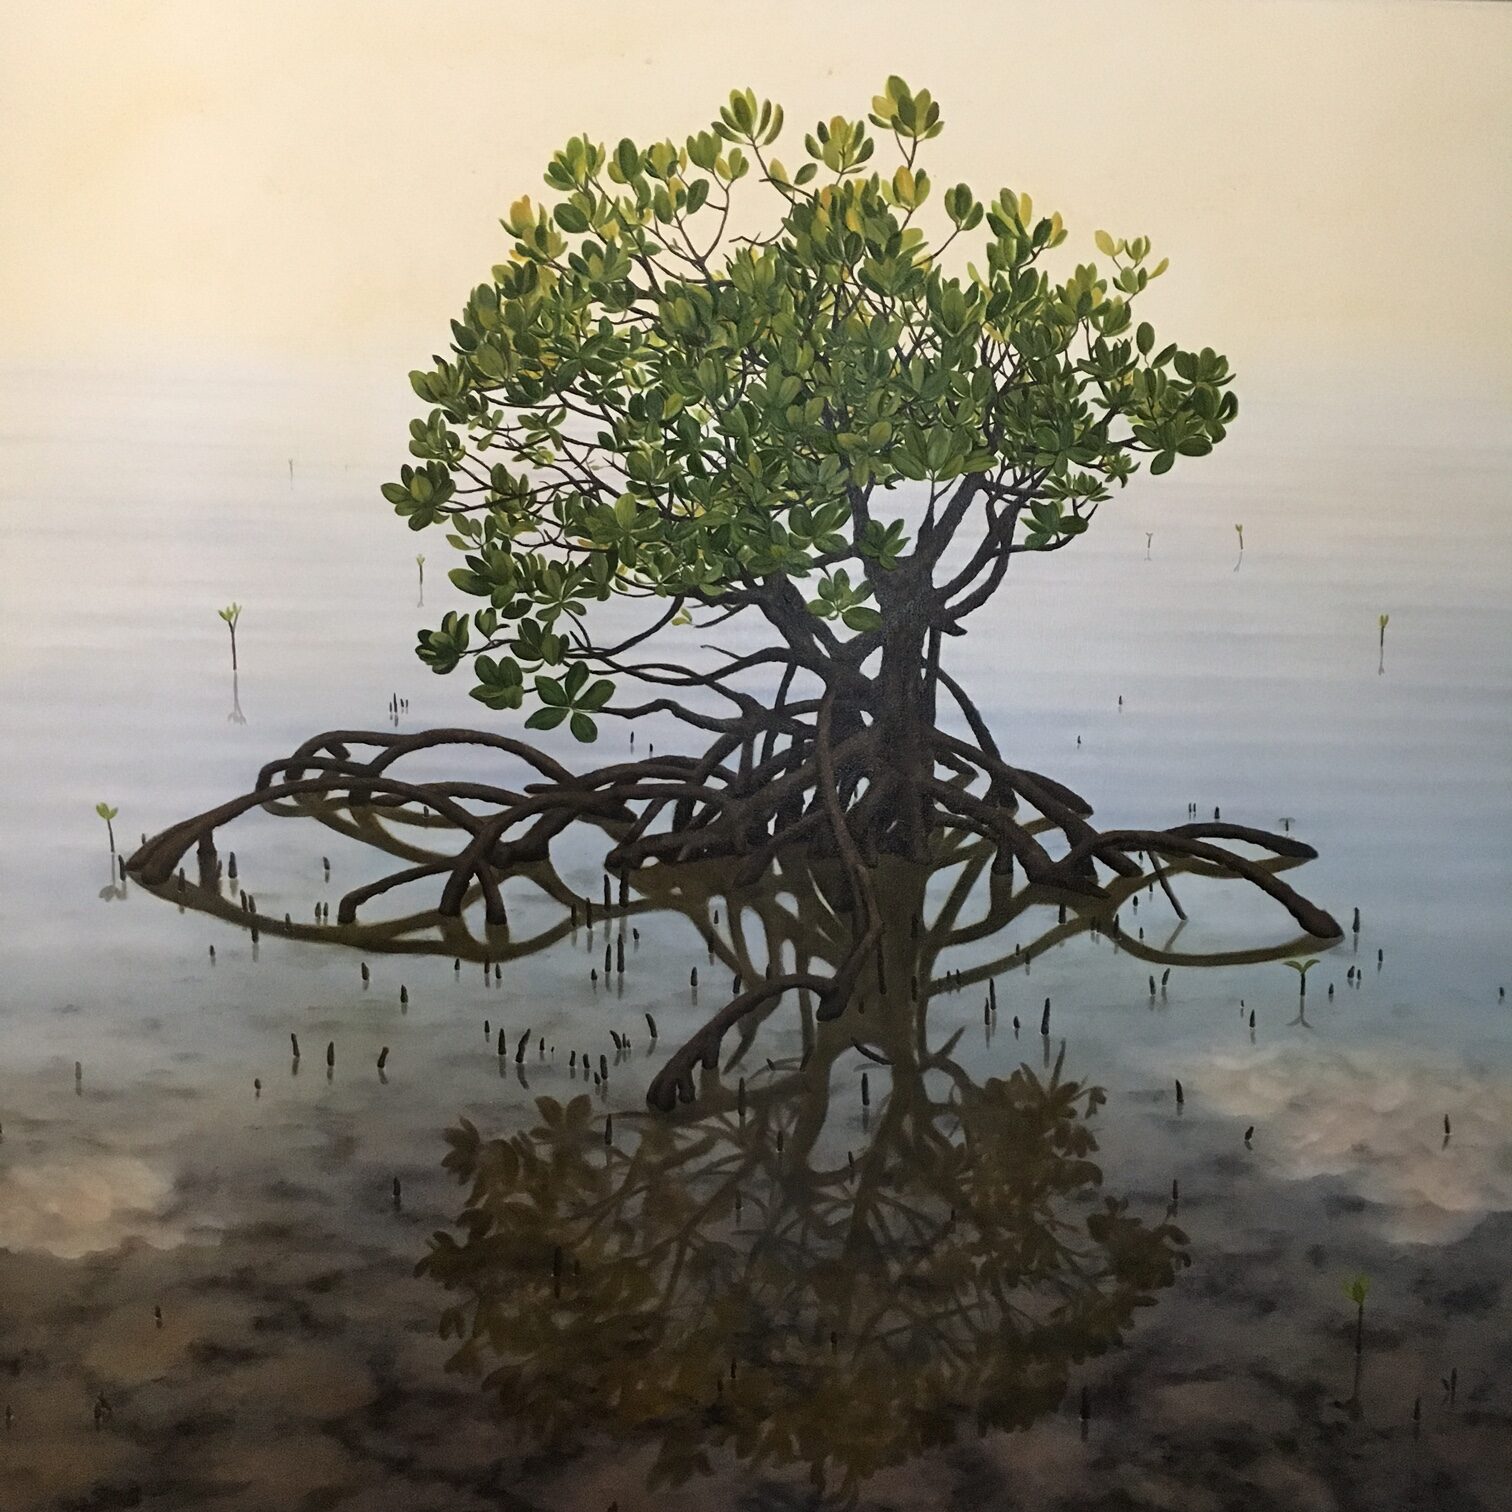 Mindfulness Mangrove Image